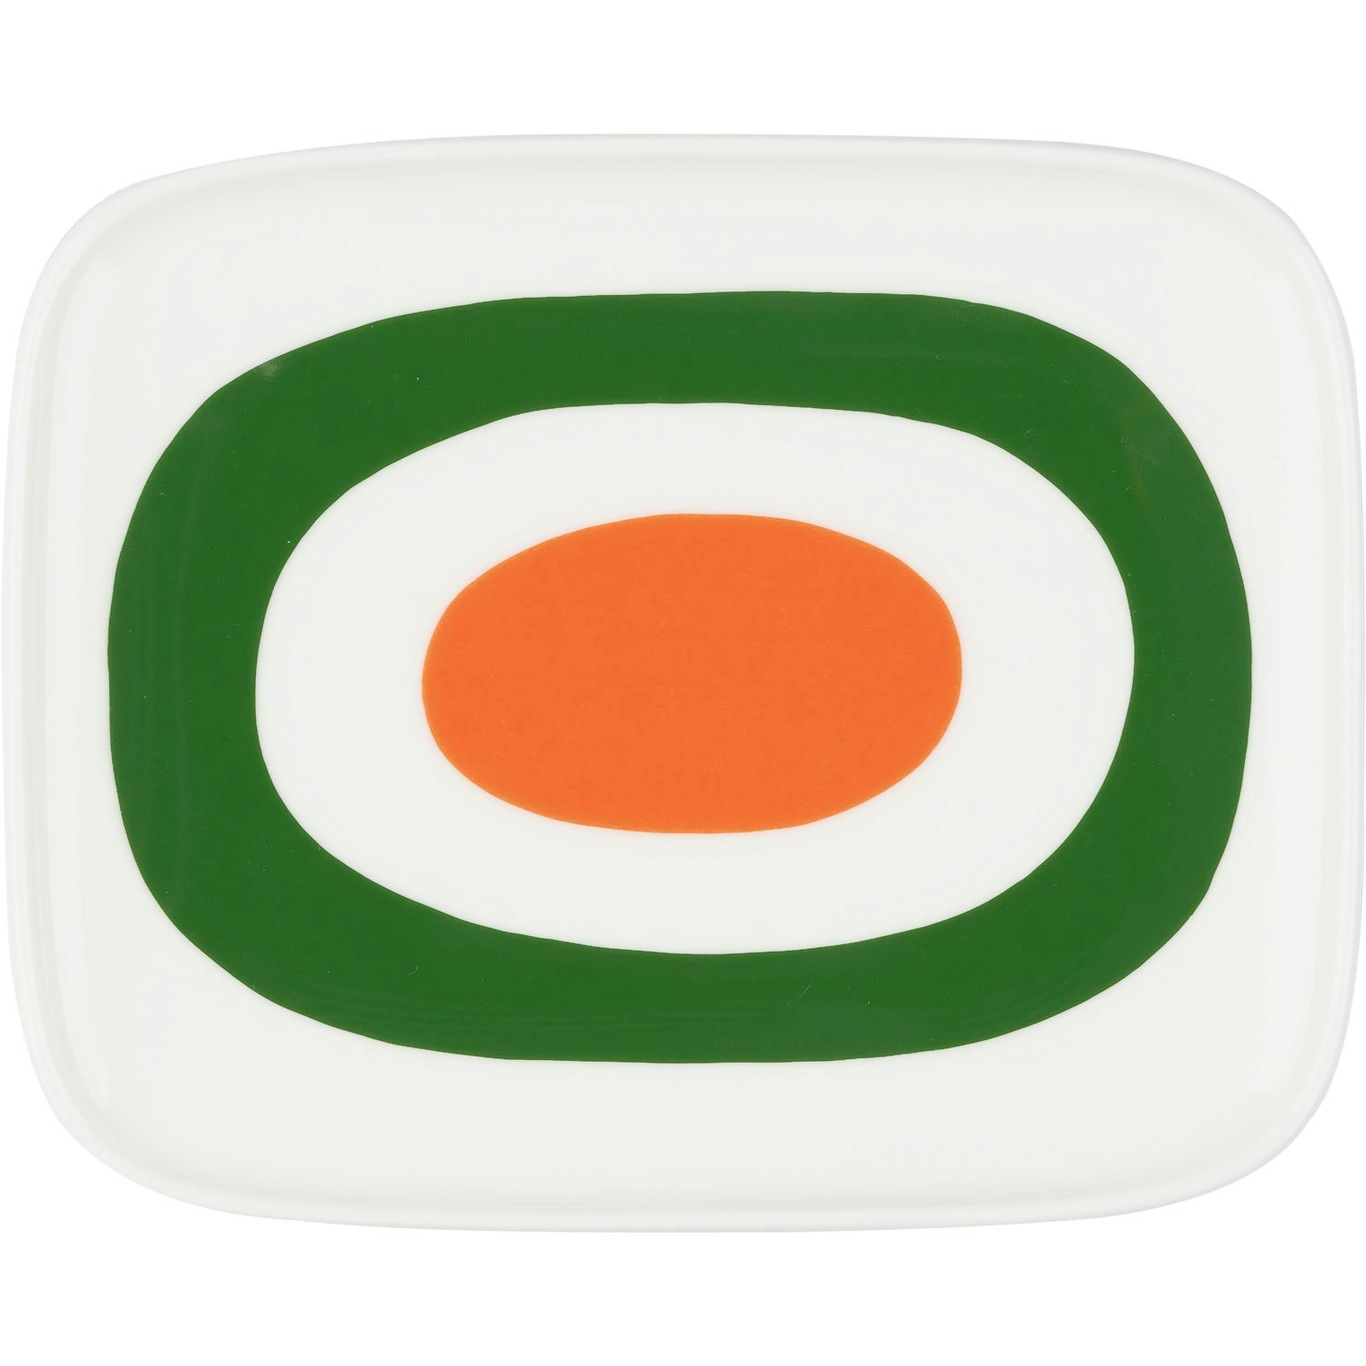 Melooni Plate 12x15 cm, White / Green / Orange